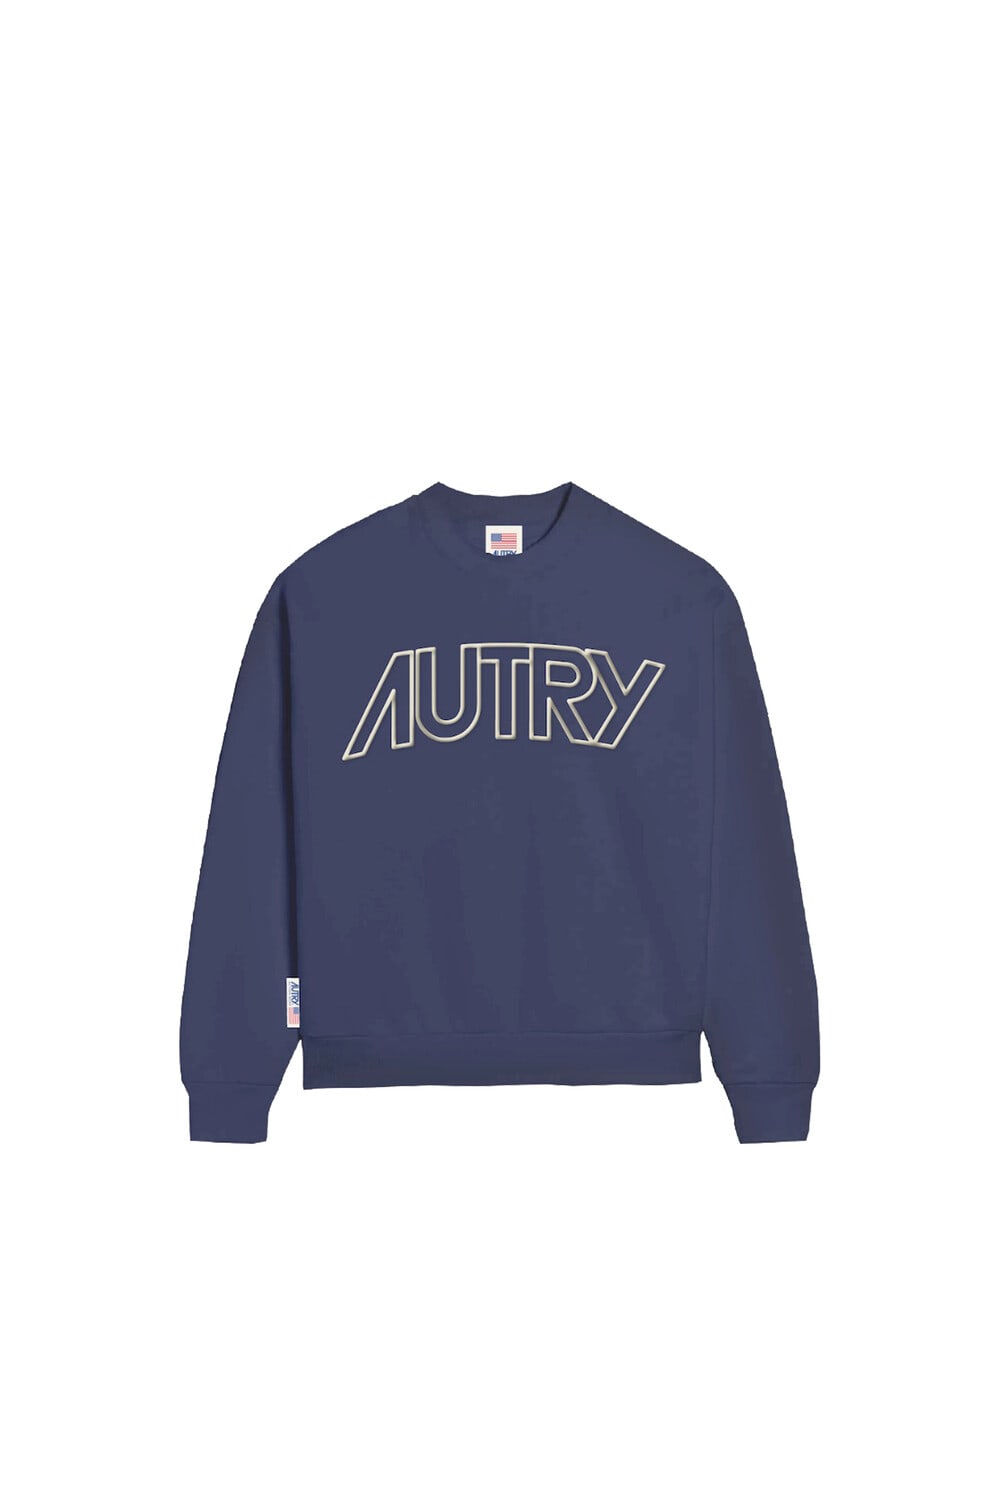 Autry Sweatshirt Icon Apparel In Blue